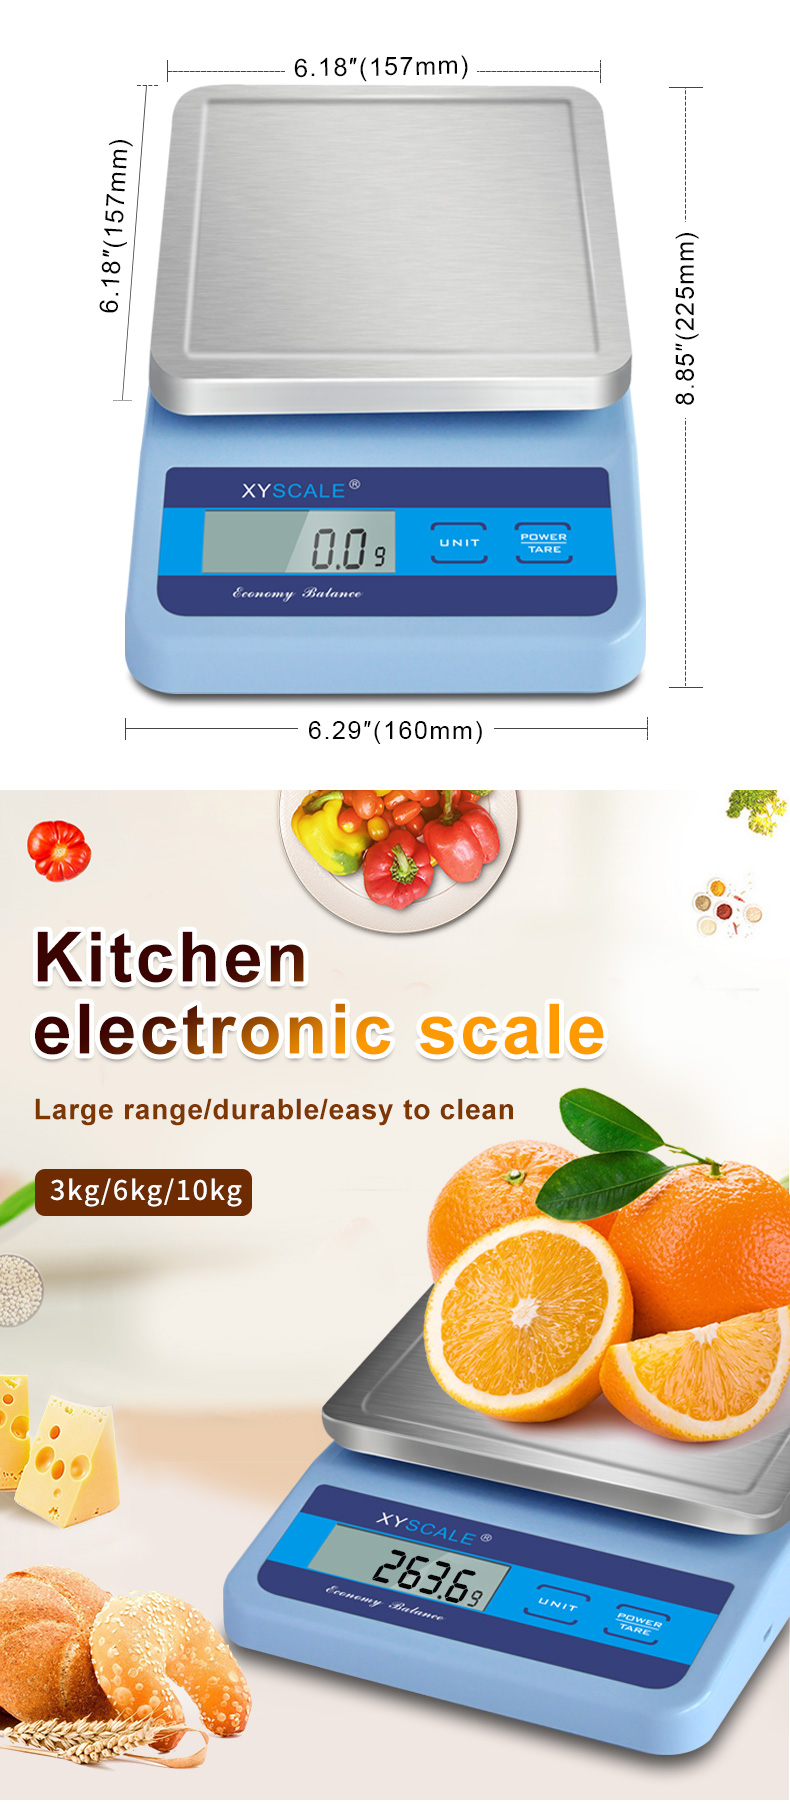 H11703e2c625d4c7a84bc4eba2359b656I - Kitchen electronic scale 3kg 6kg 10kg